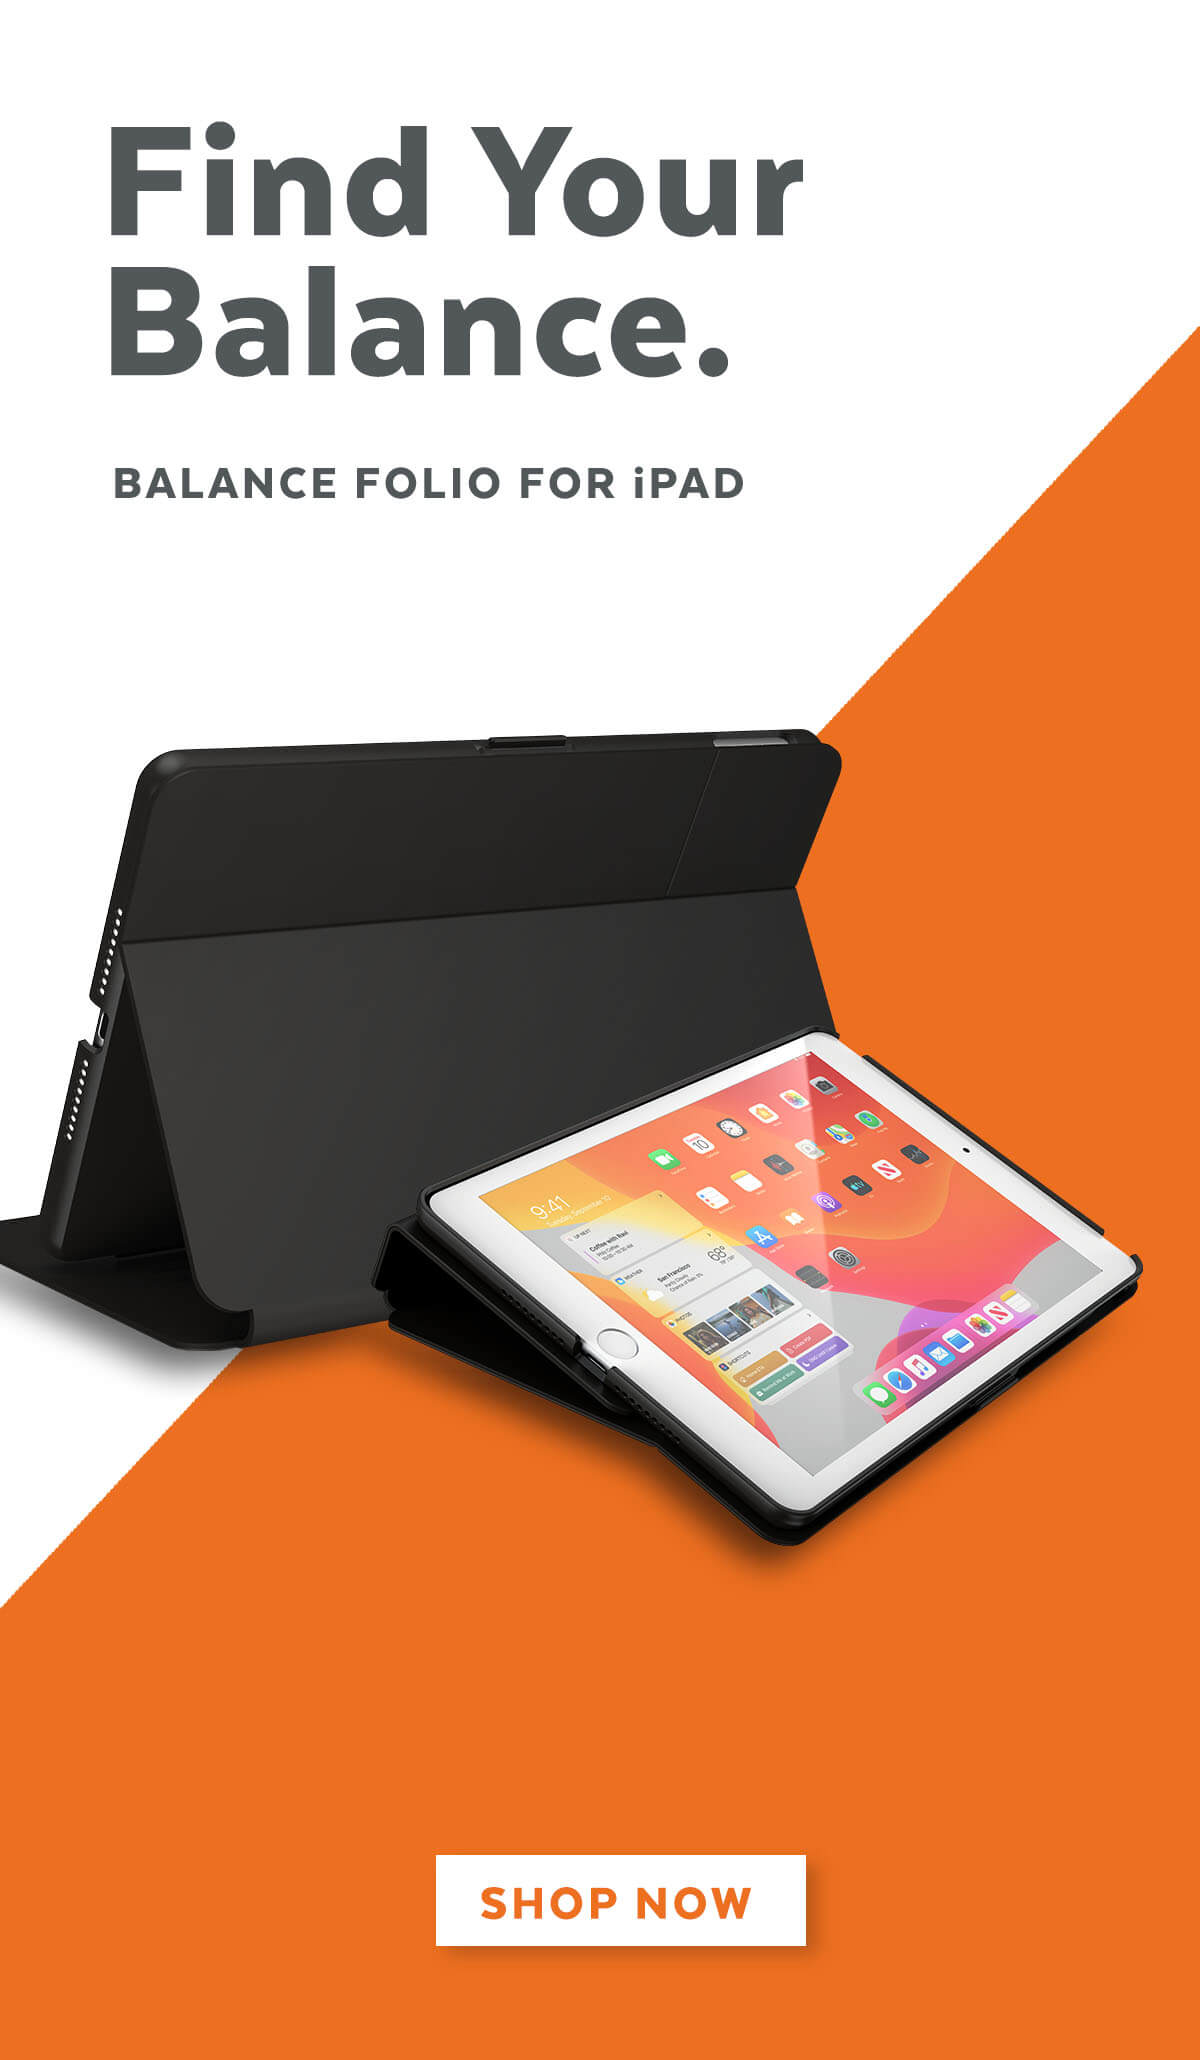 Find your balance. Balance folio for iPad. Shop now.